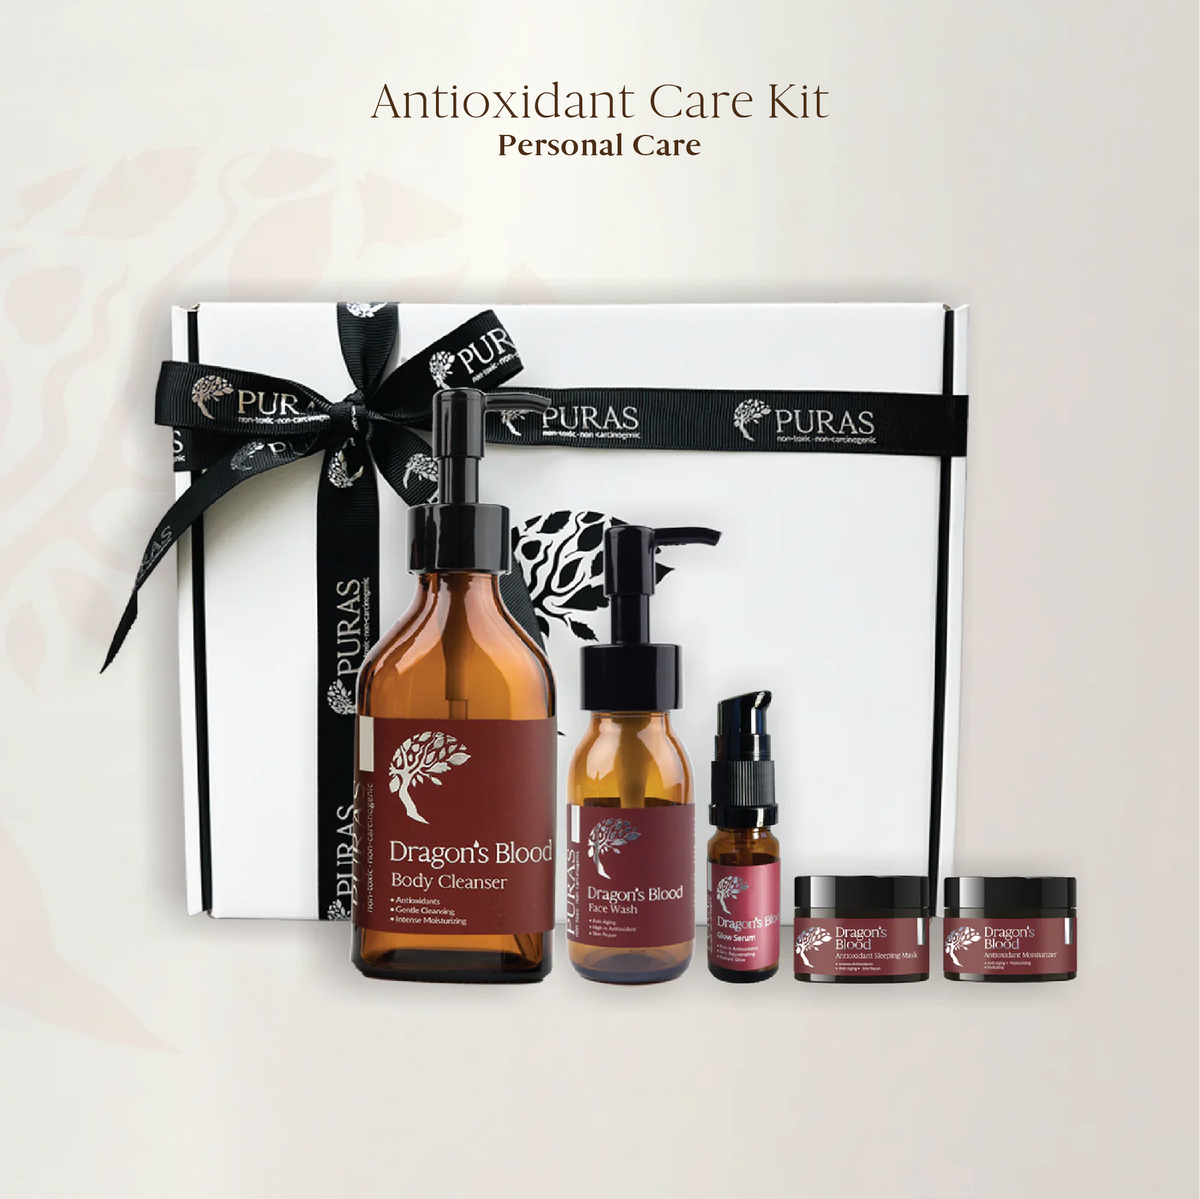 Antioxidant Care Kit